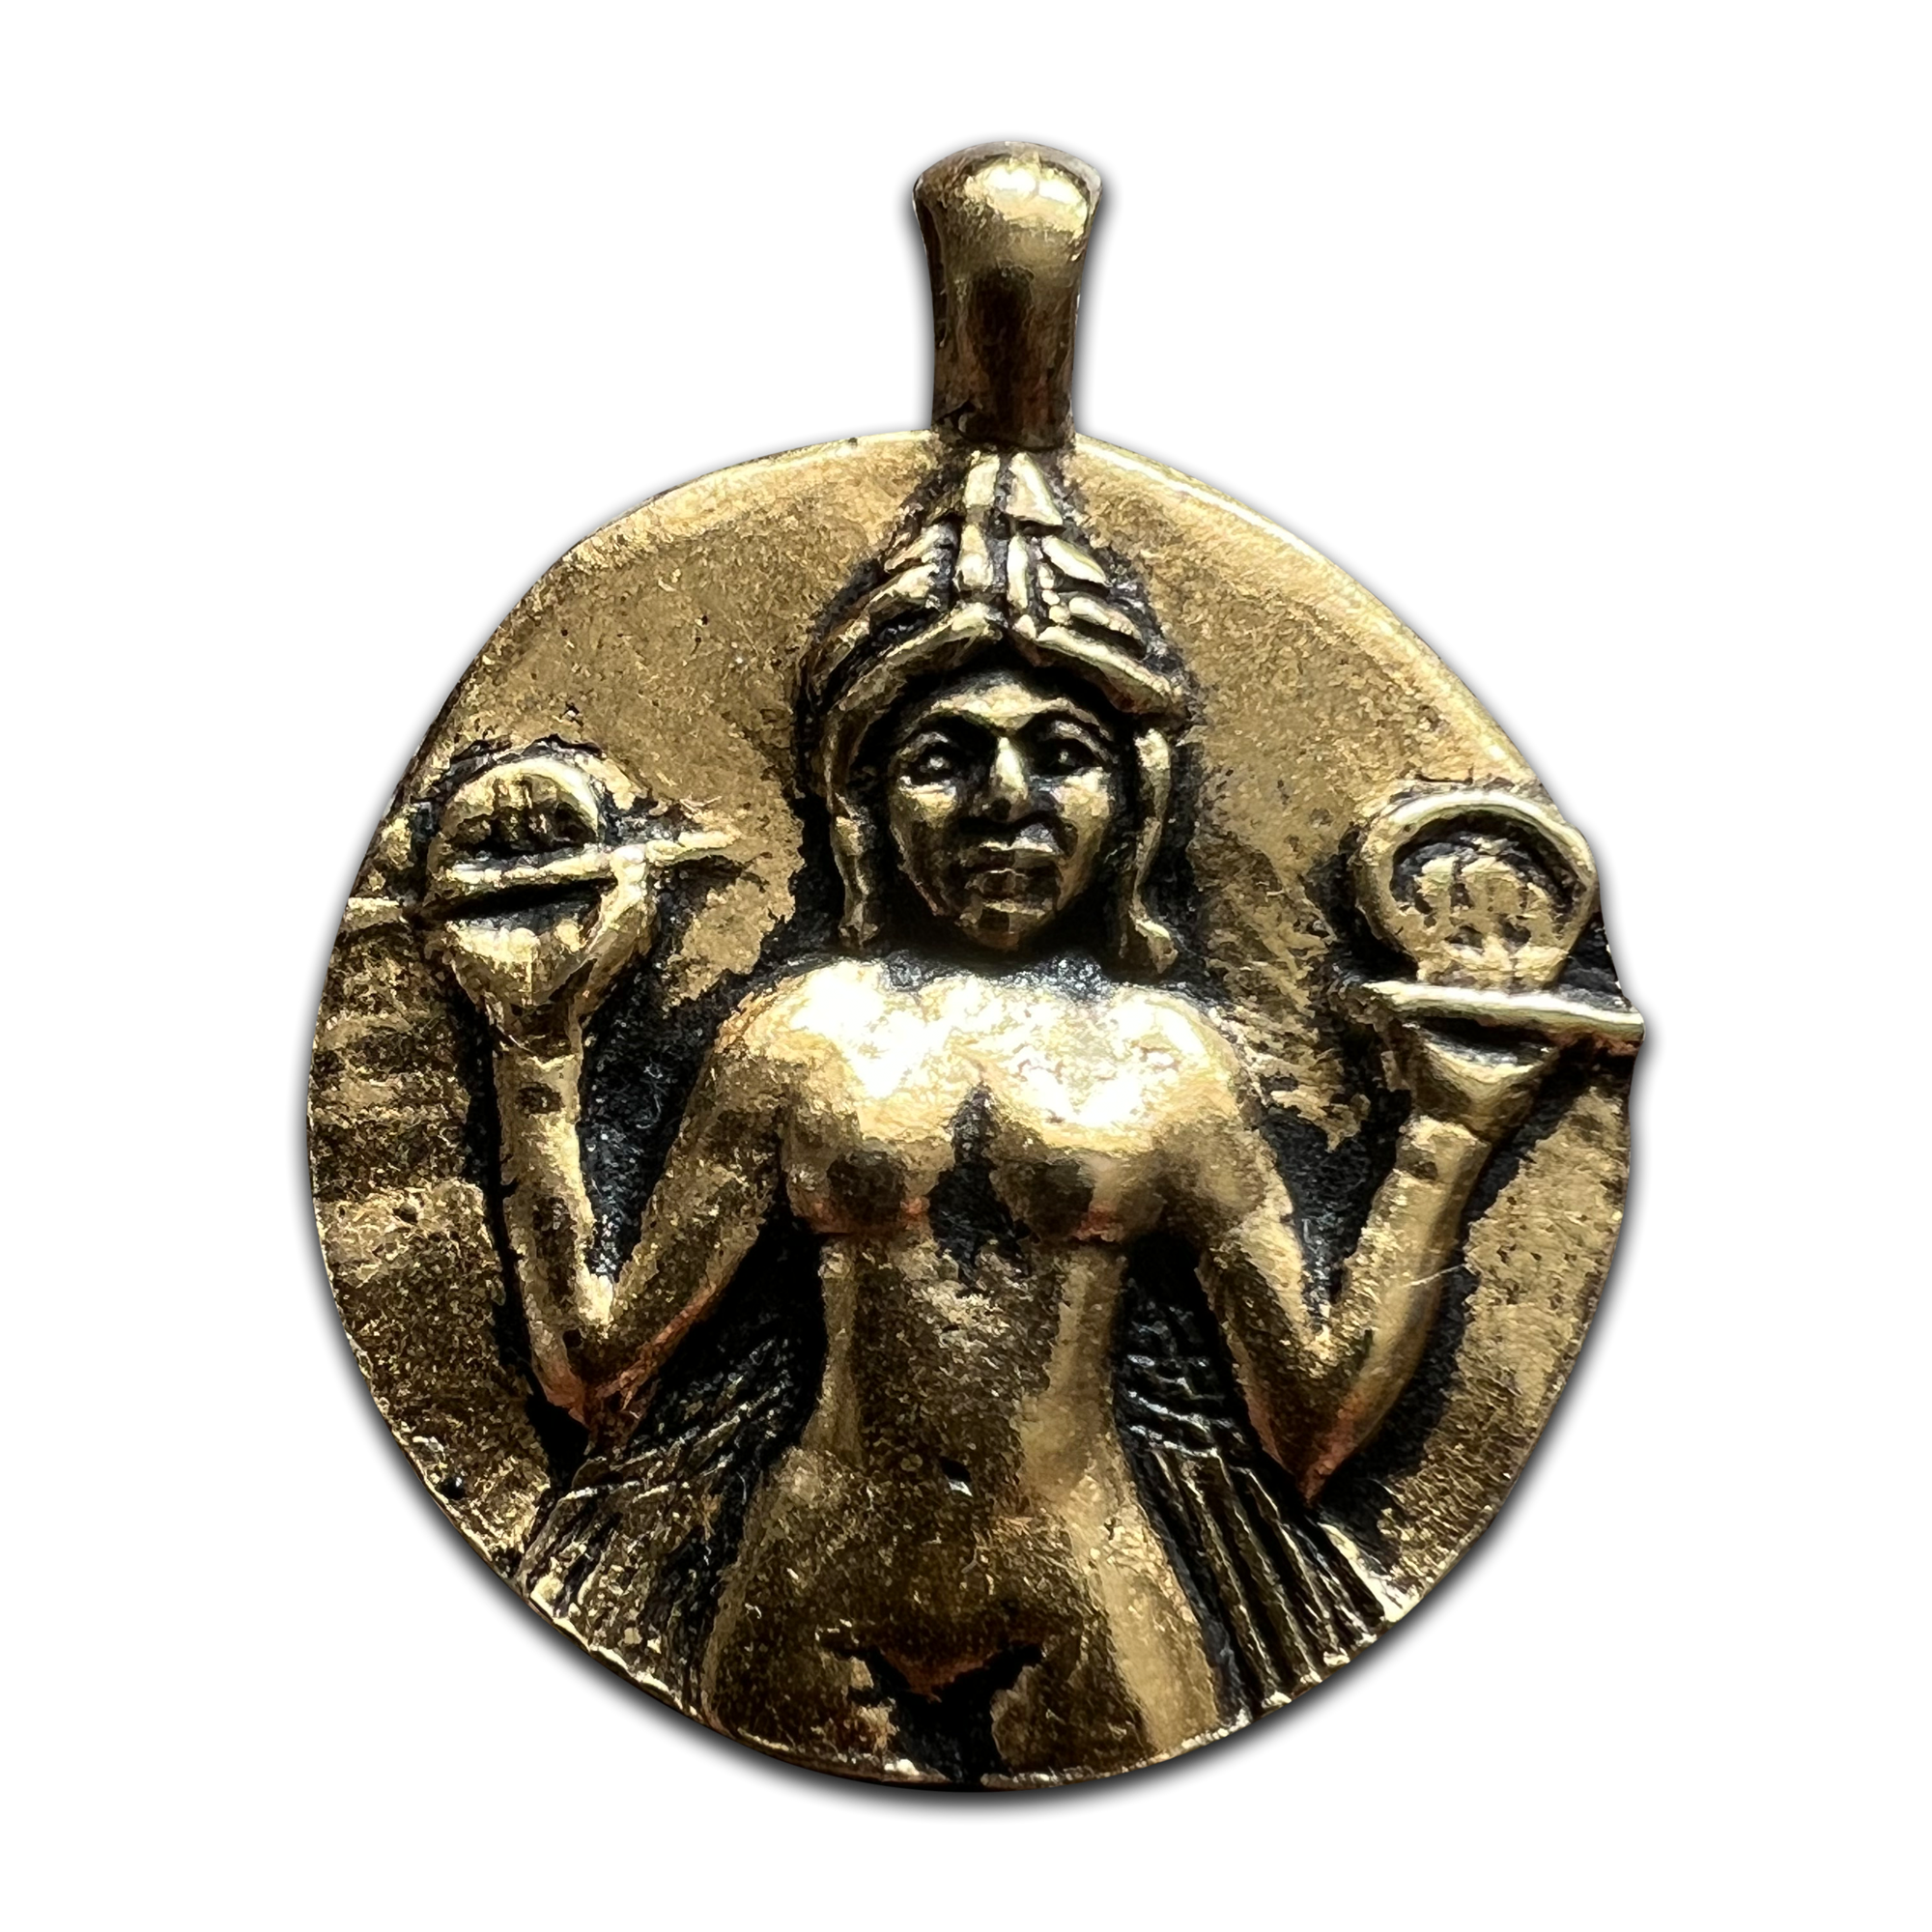 Goddess Ishtar for Sexuality & War